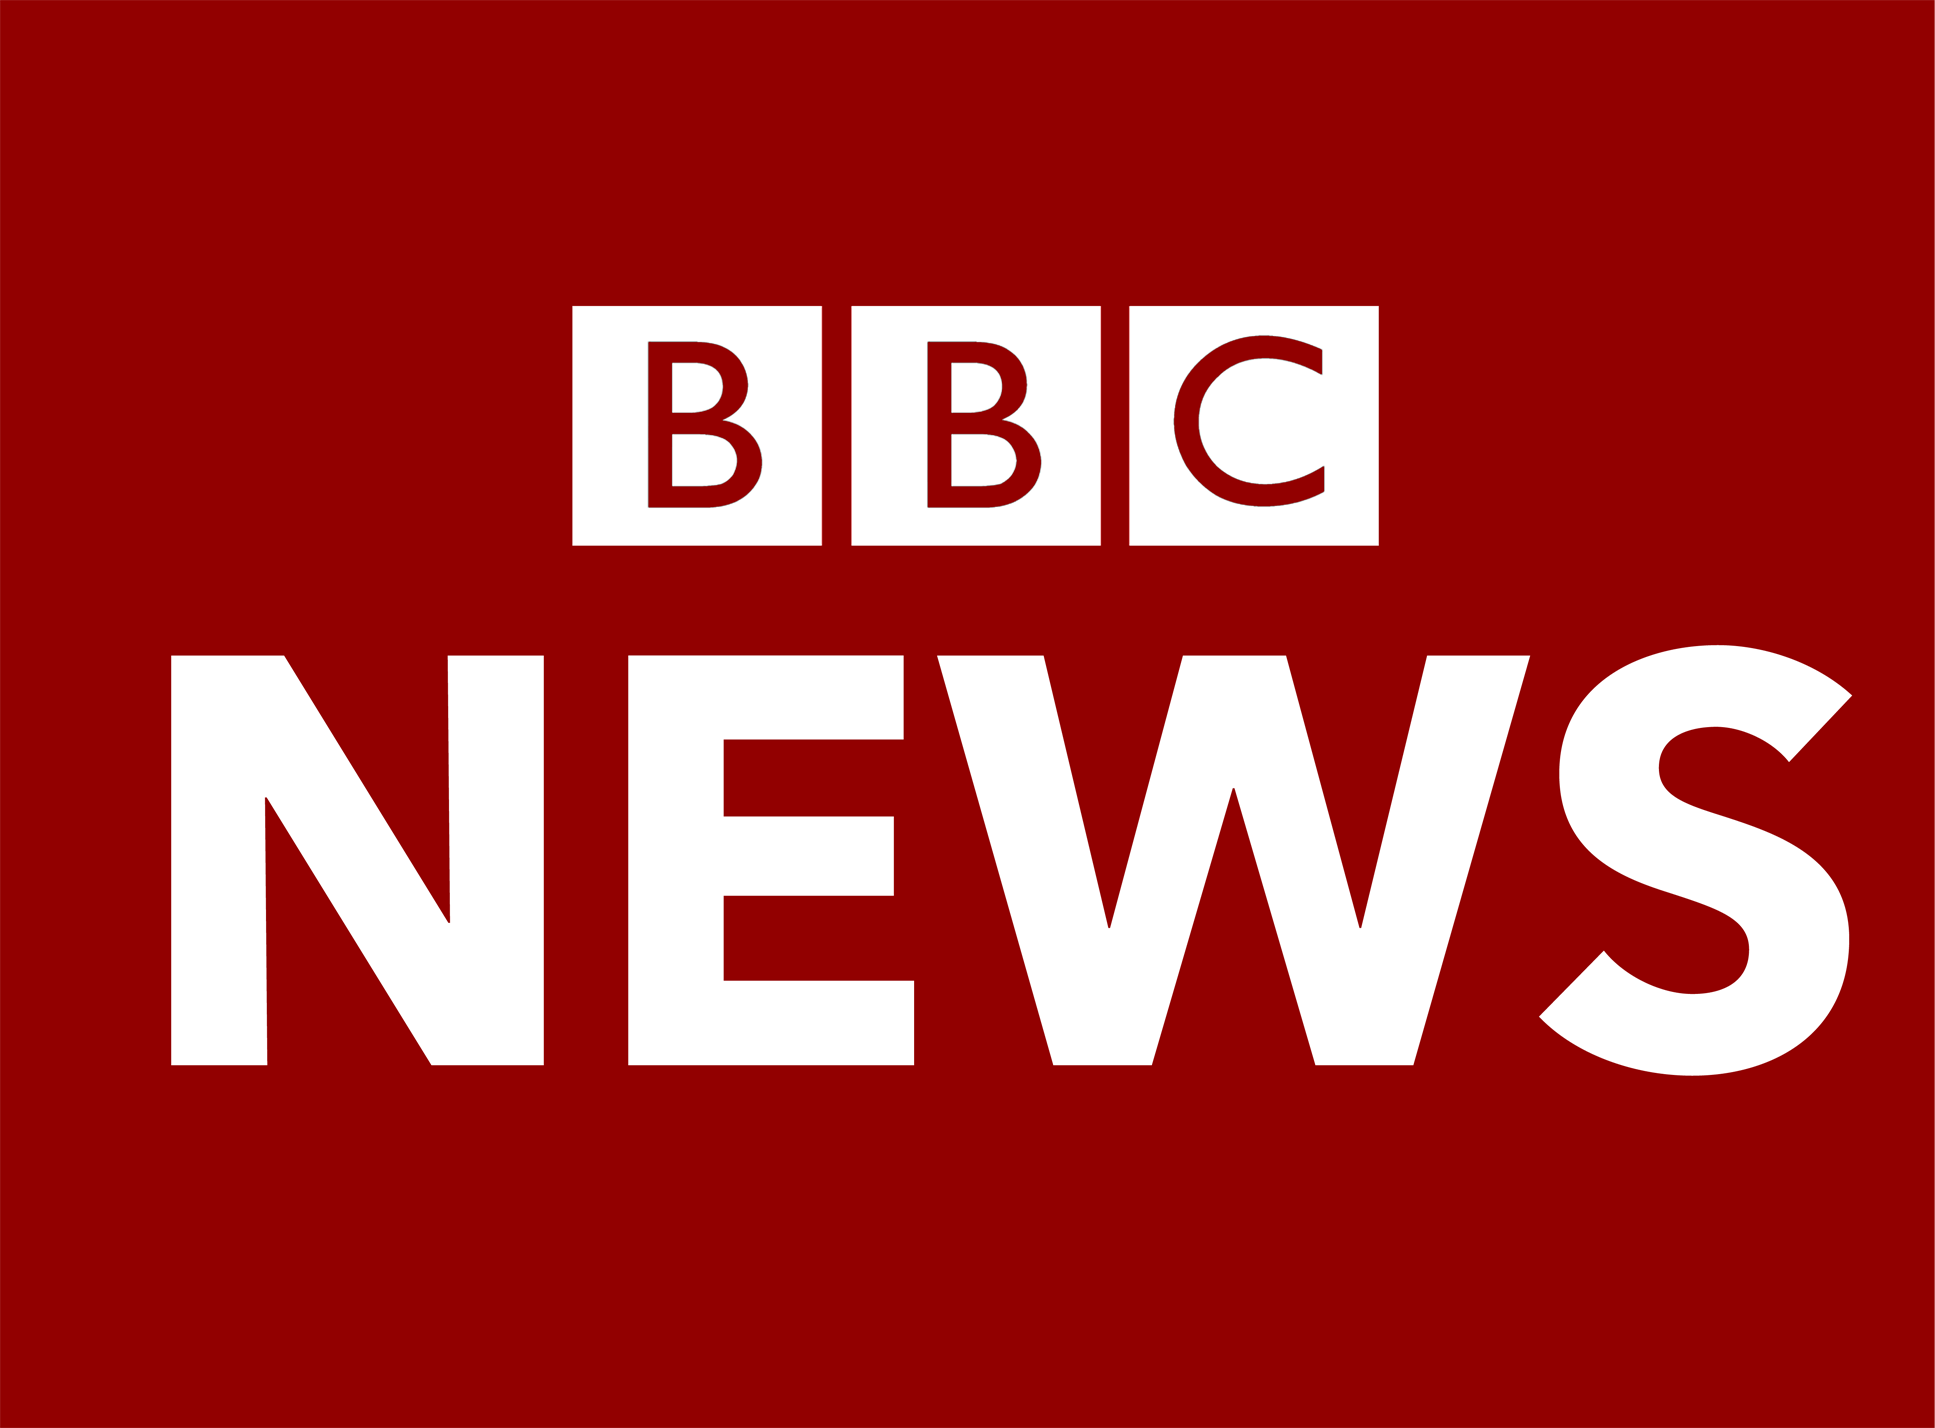 download bbc football news